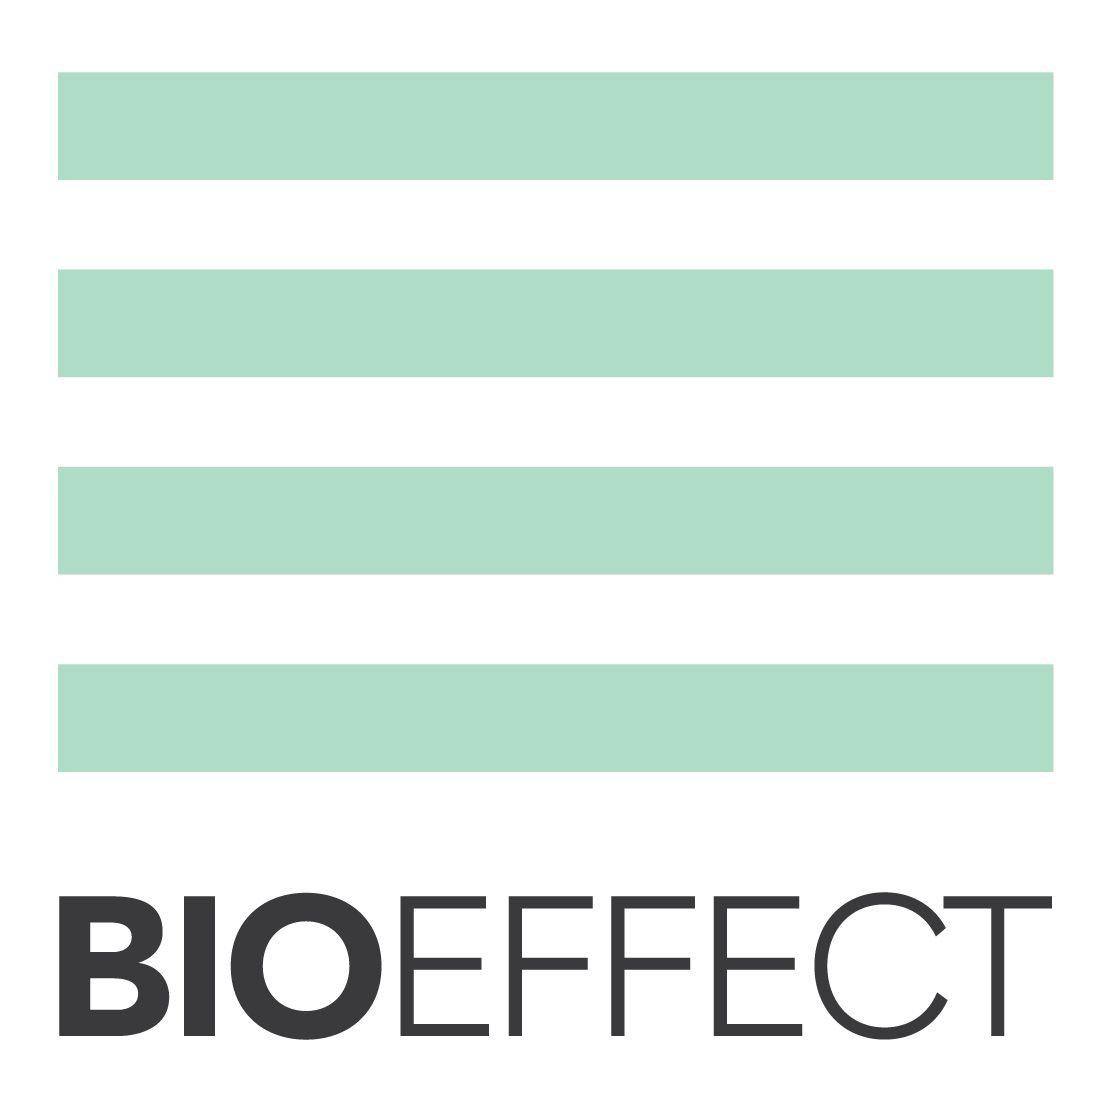 BIOEFFECT logo